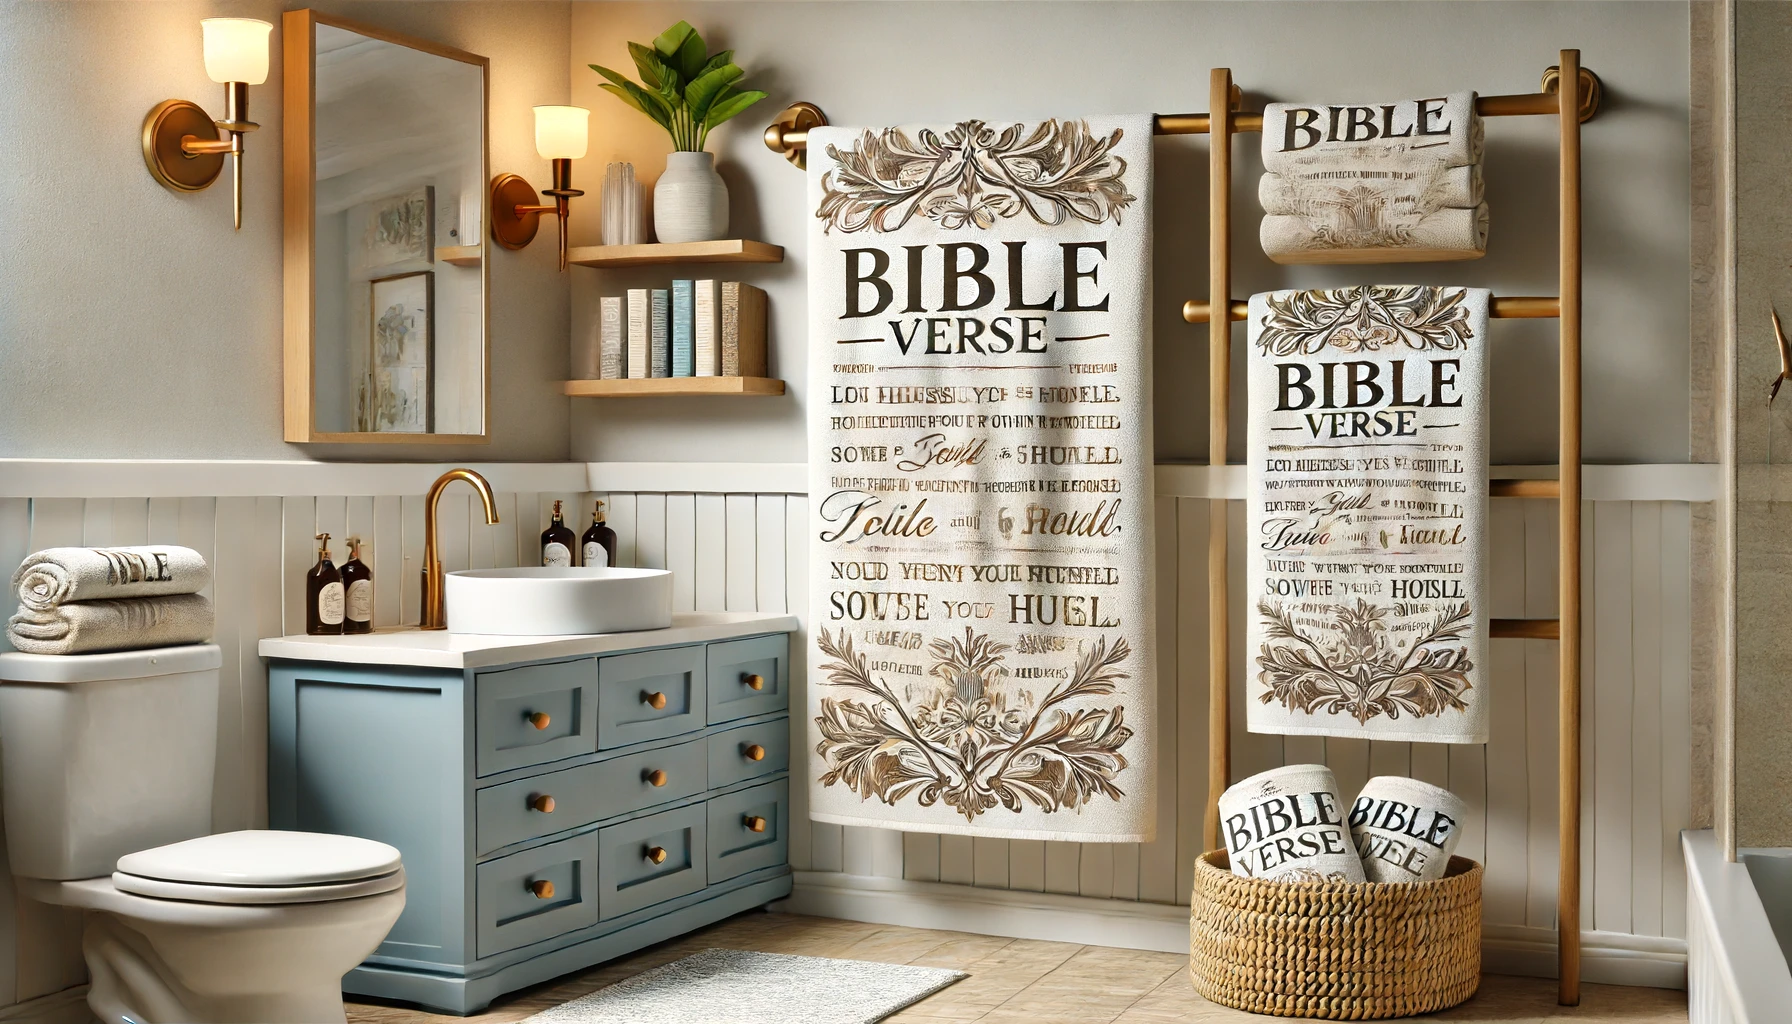 Bible verse towels